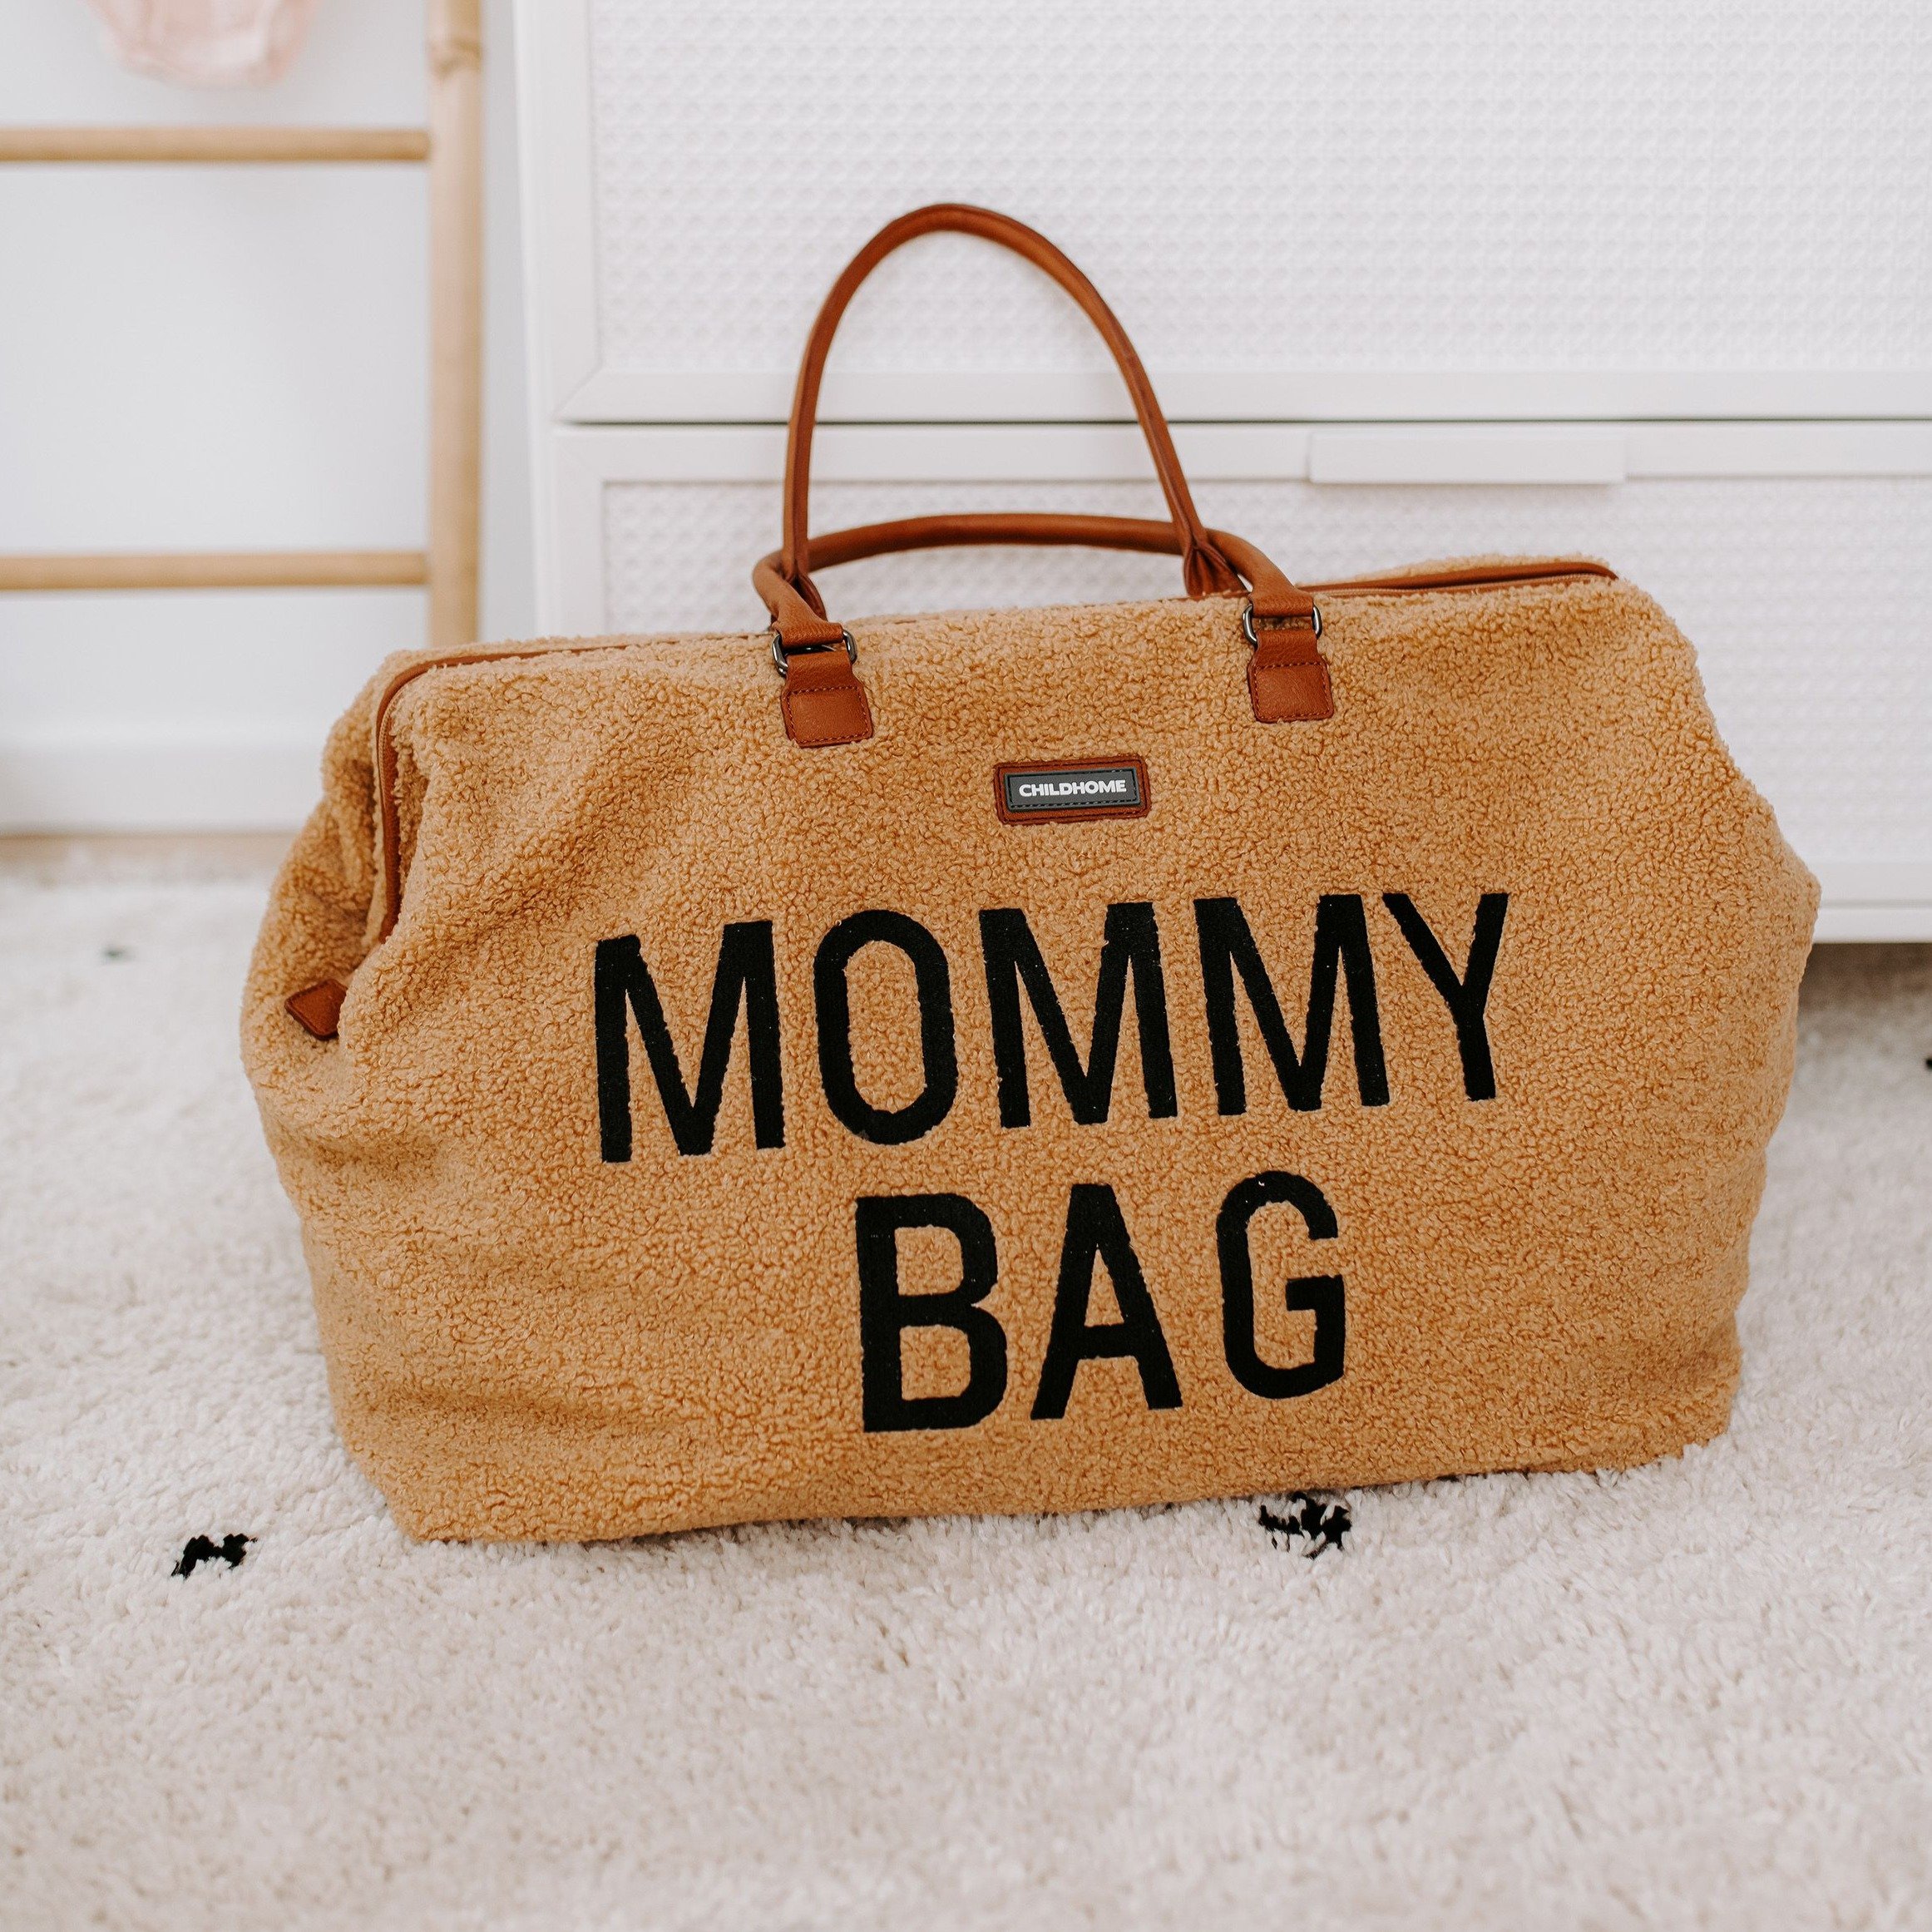 mommy-bag-teddy-neige-childhome-3_2323x2323